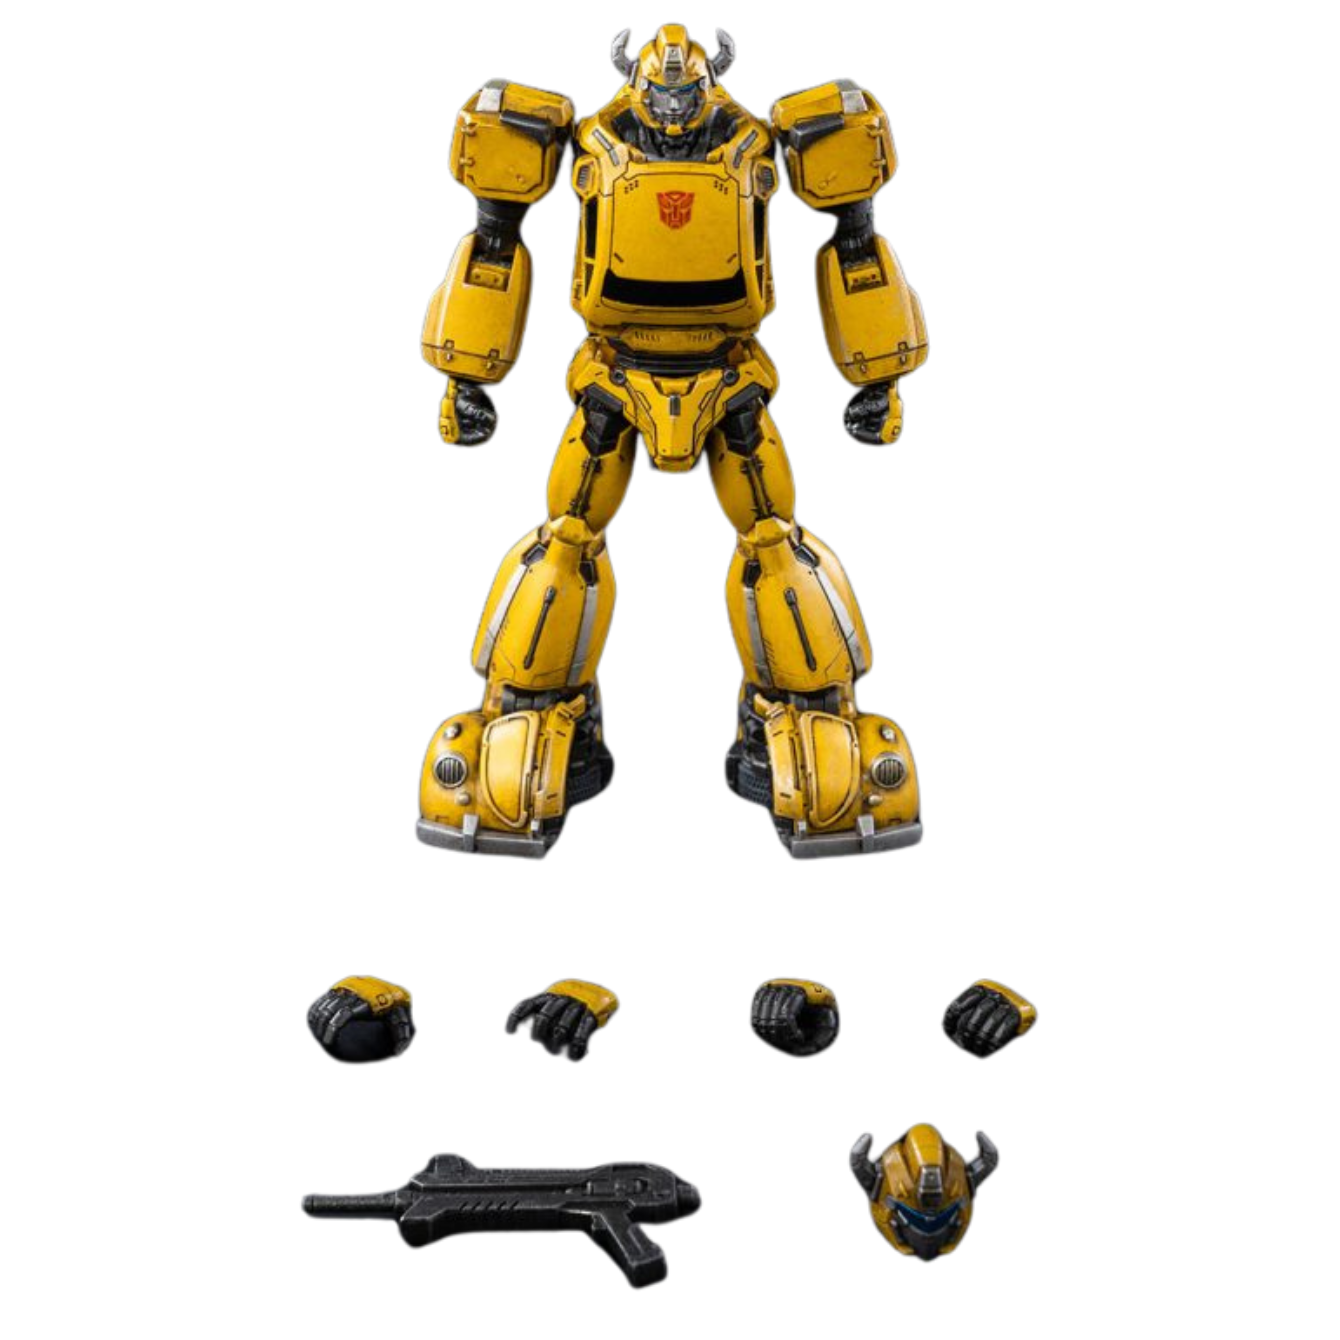 Transformers MDLX Bumblebee